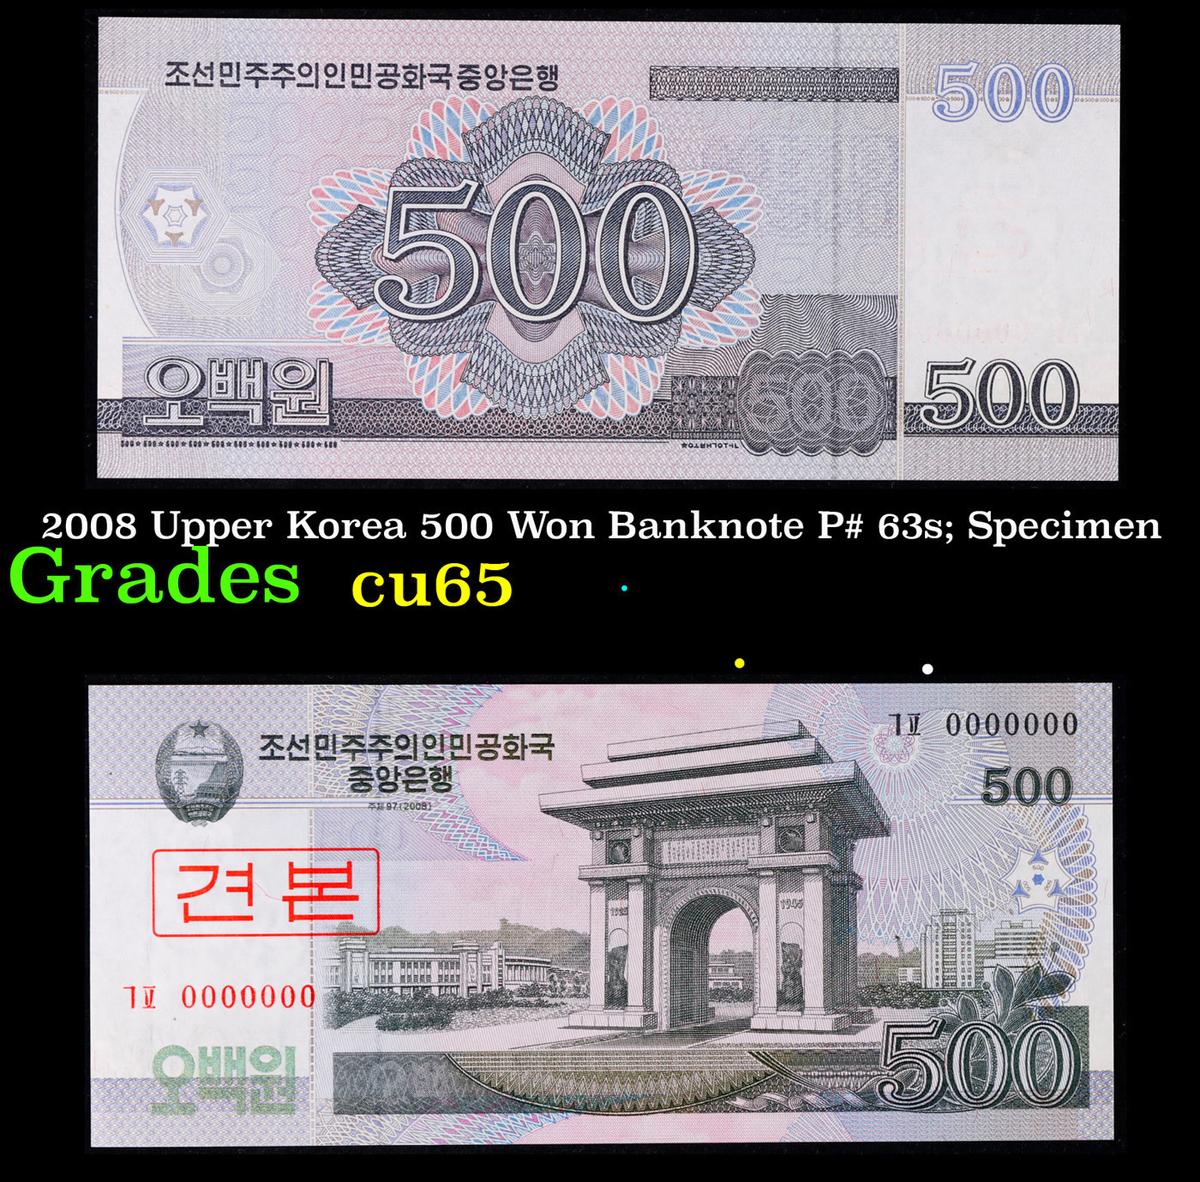 2008 Upper Korea 500 Won Banknote P# 63s; Specimen Grades Gem CU